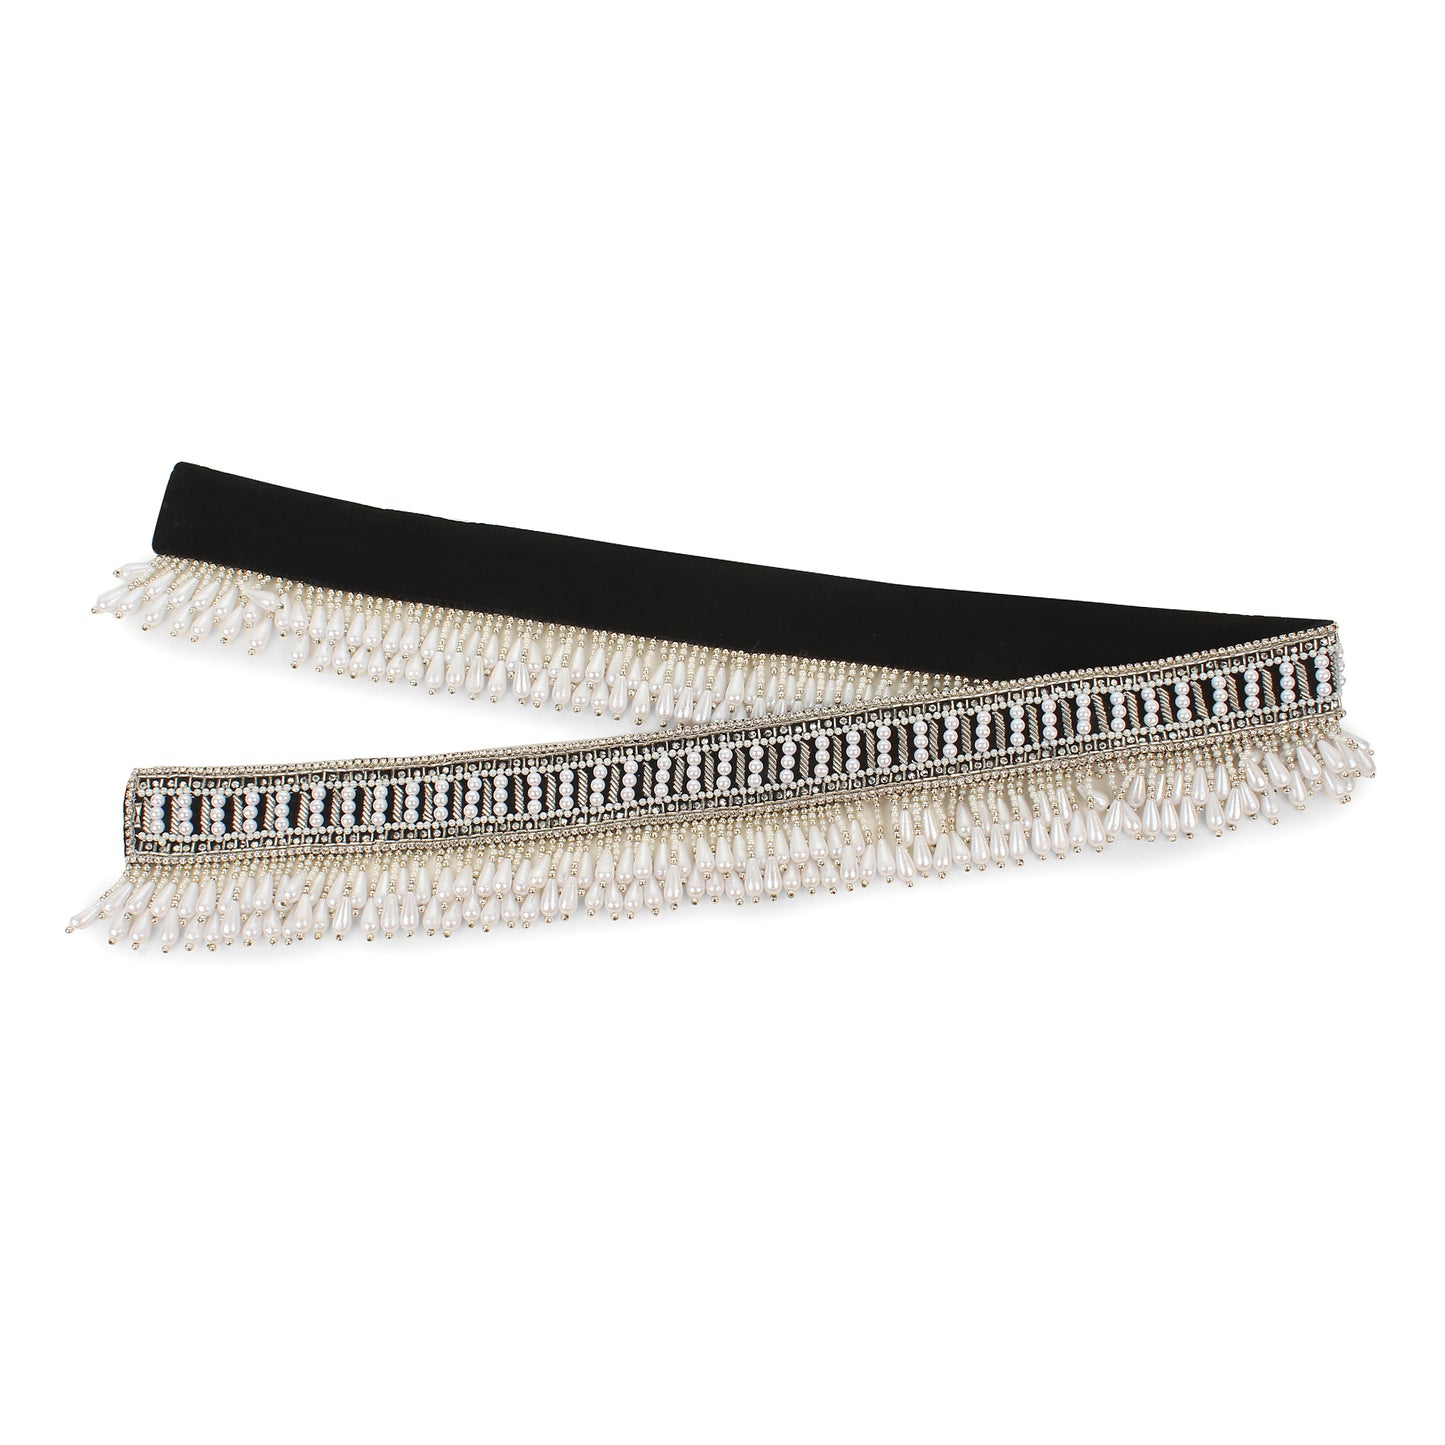 waist belt for saree online india, white waist belt for saree